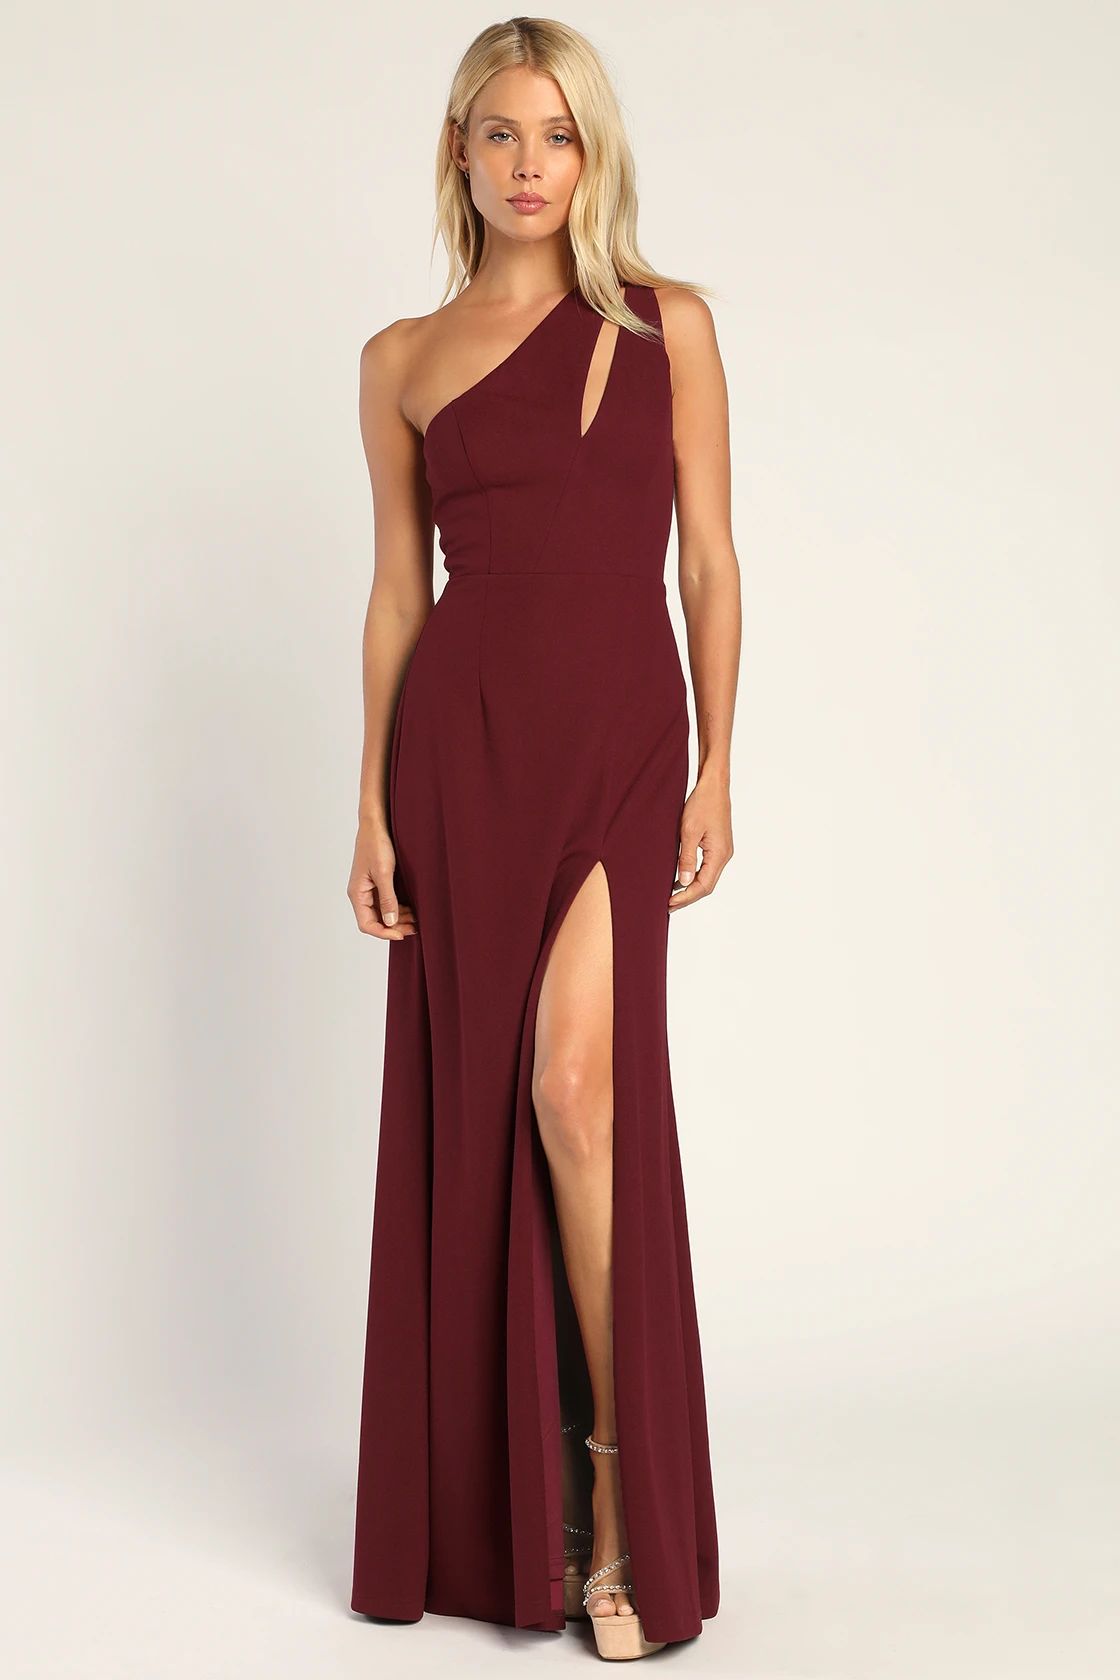 Divinely Dynamite Burgundy One-Shoulder Maxi Dress | Lulus (US)